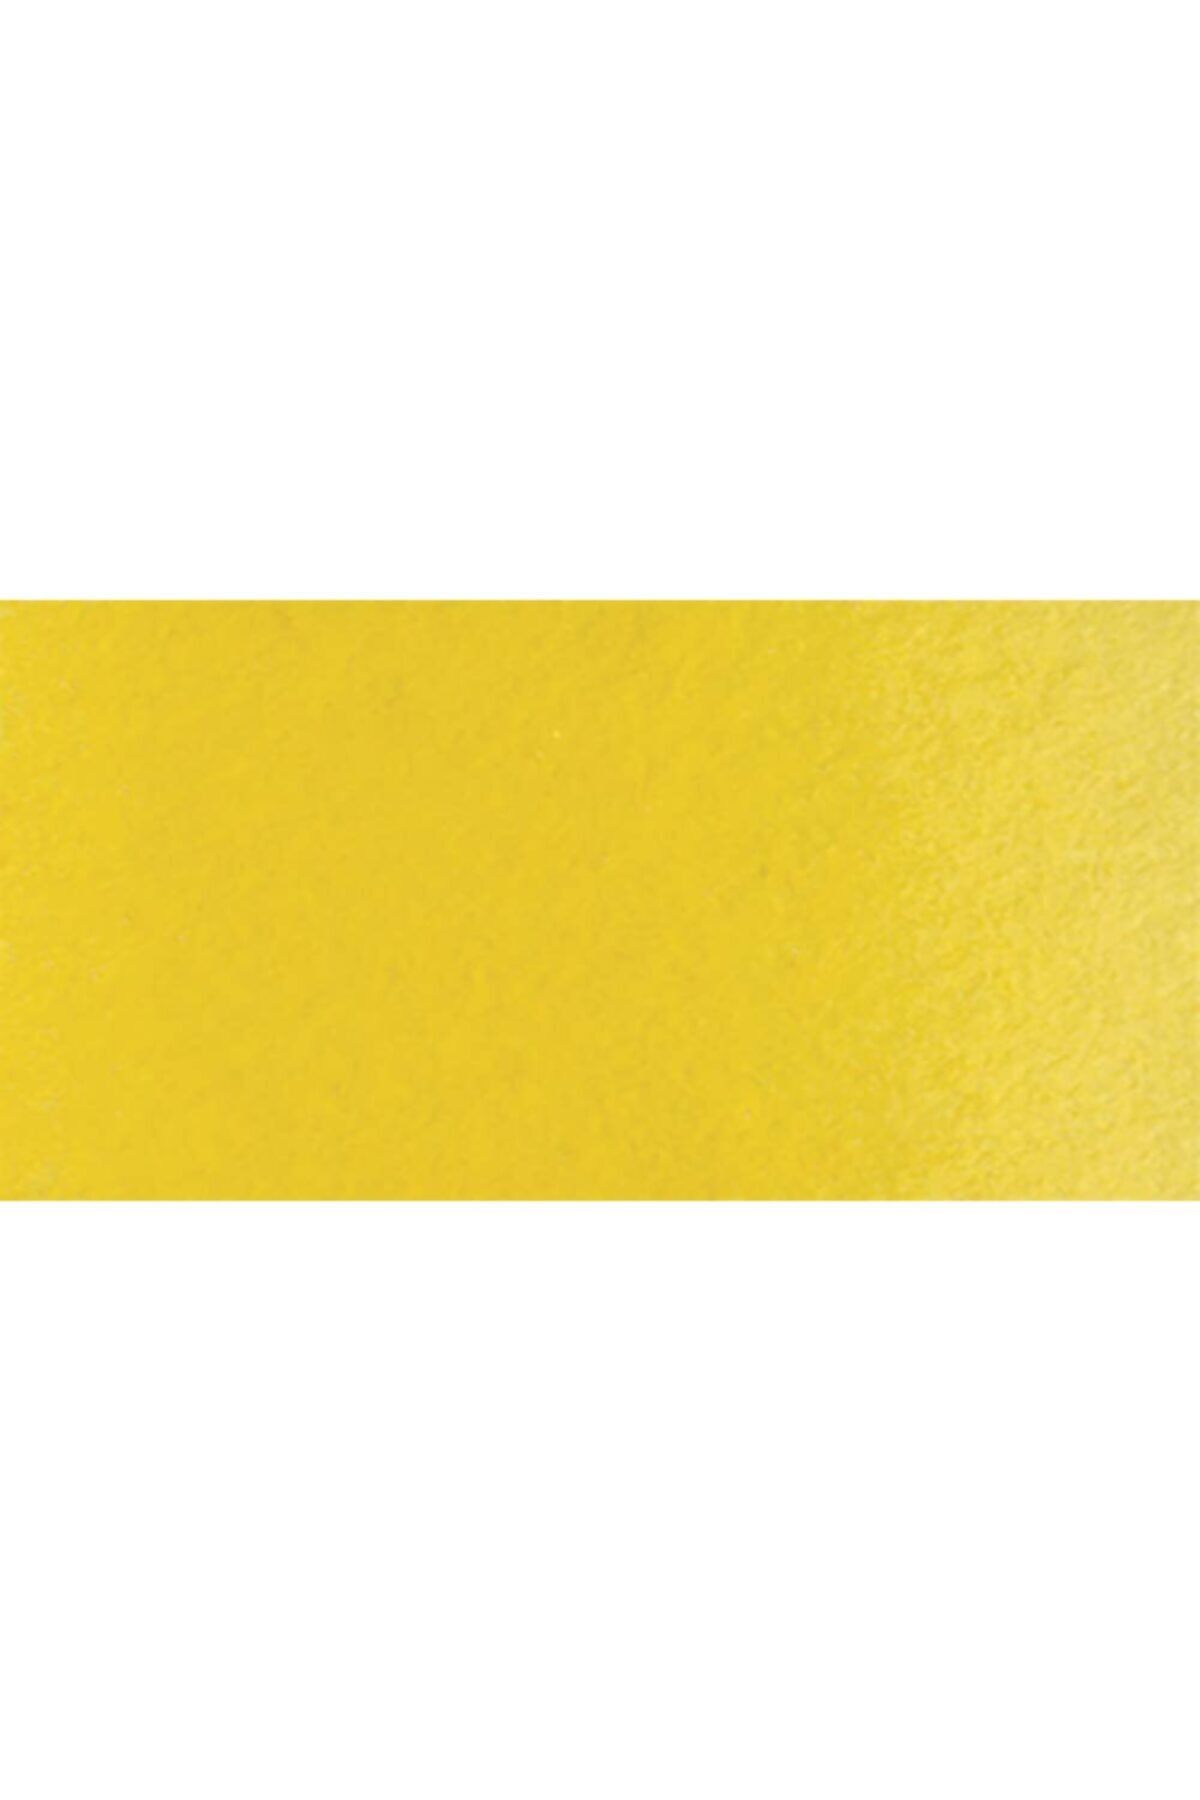 Lukas Artist Yarım Tablet Sulu Boya 1024 Jaune Indien Yellow